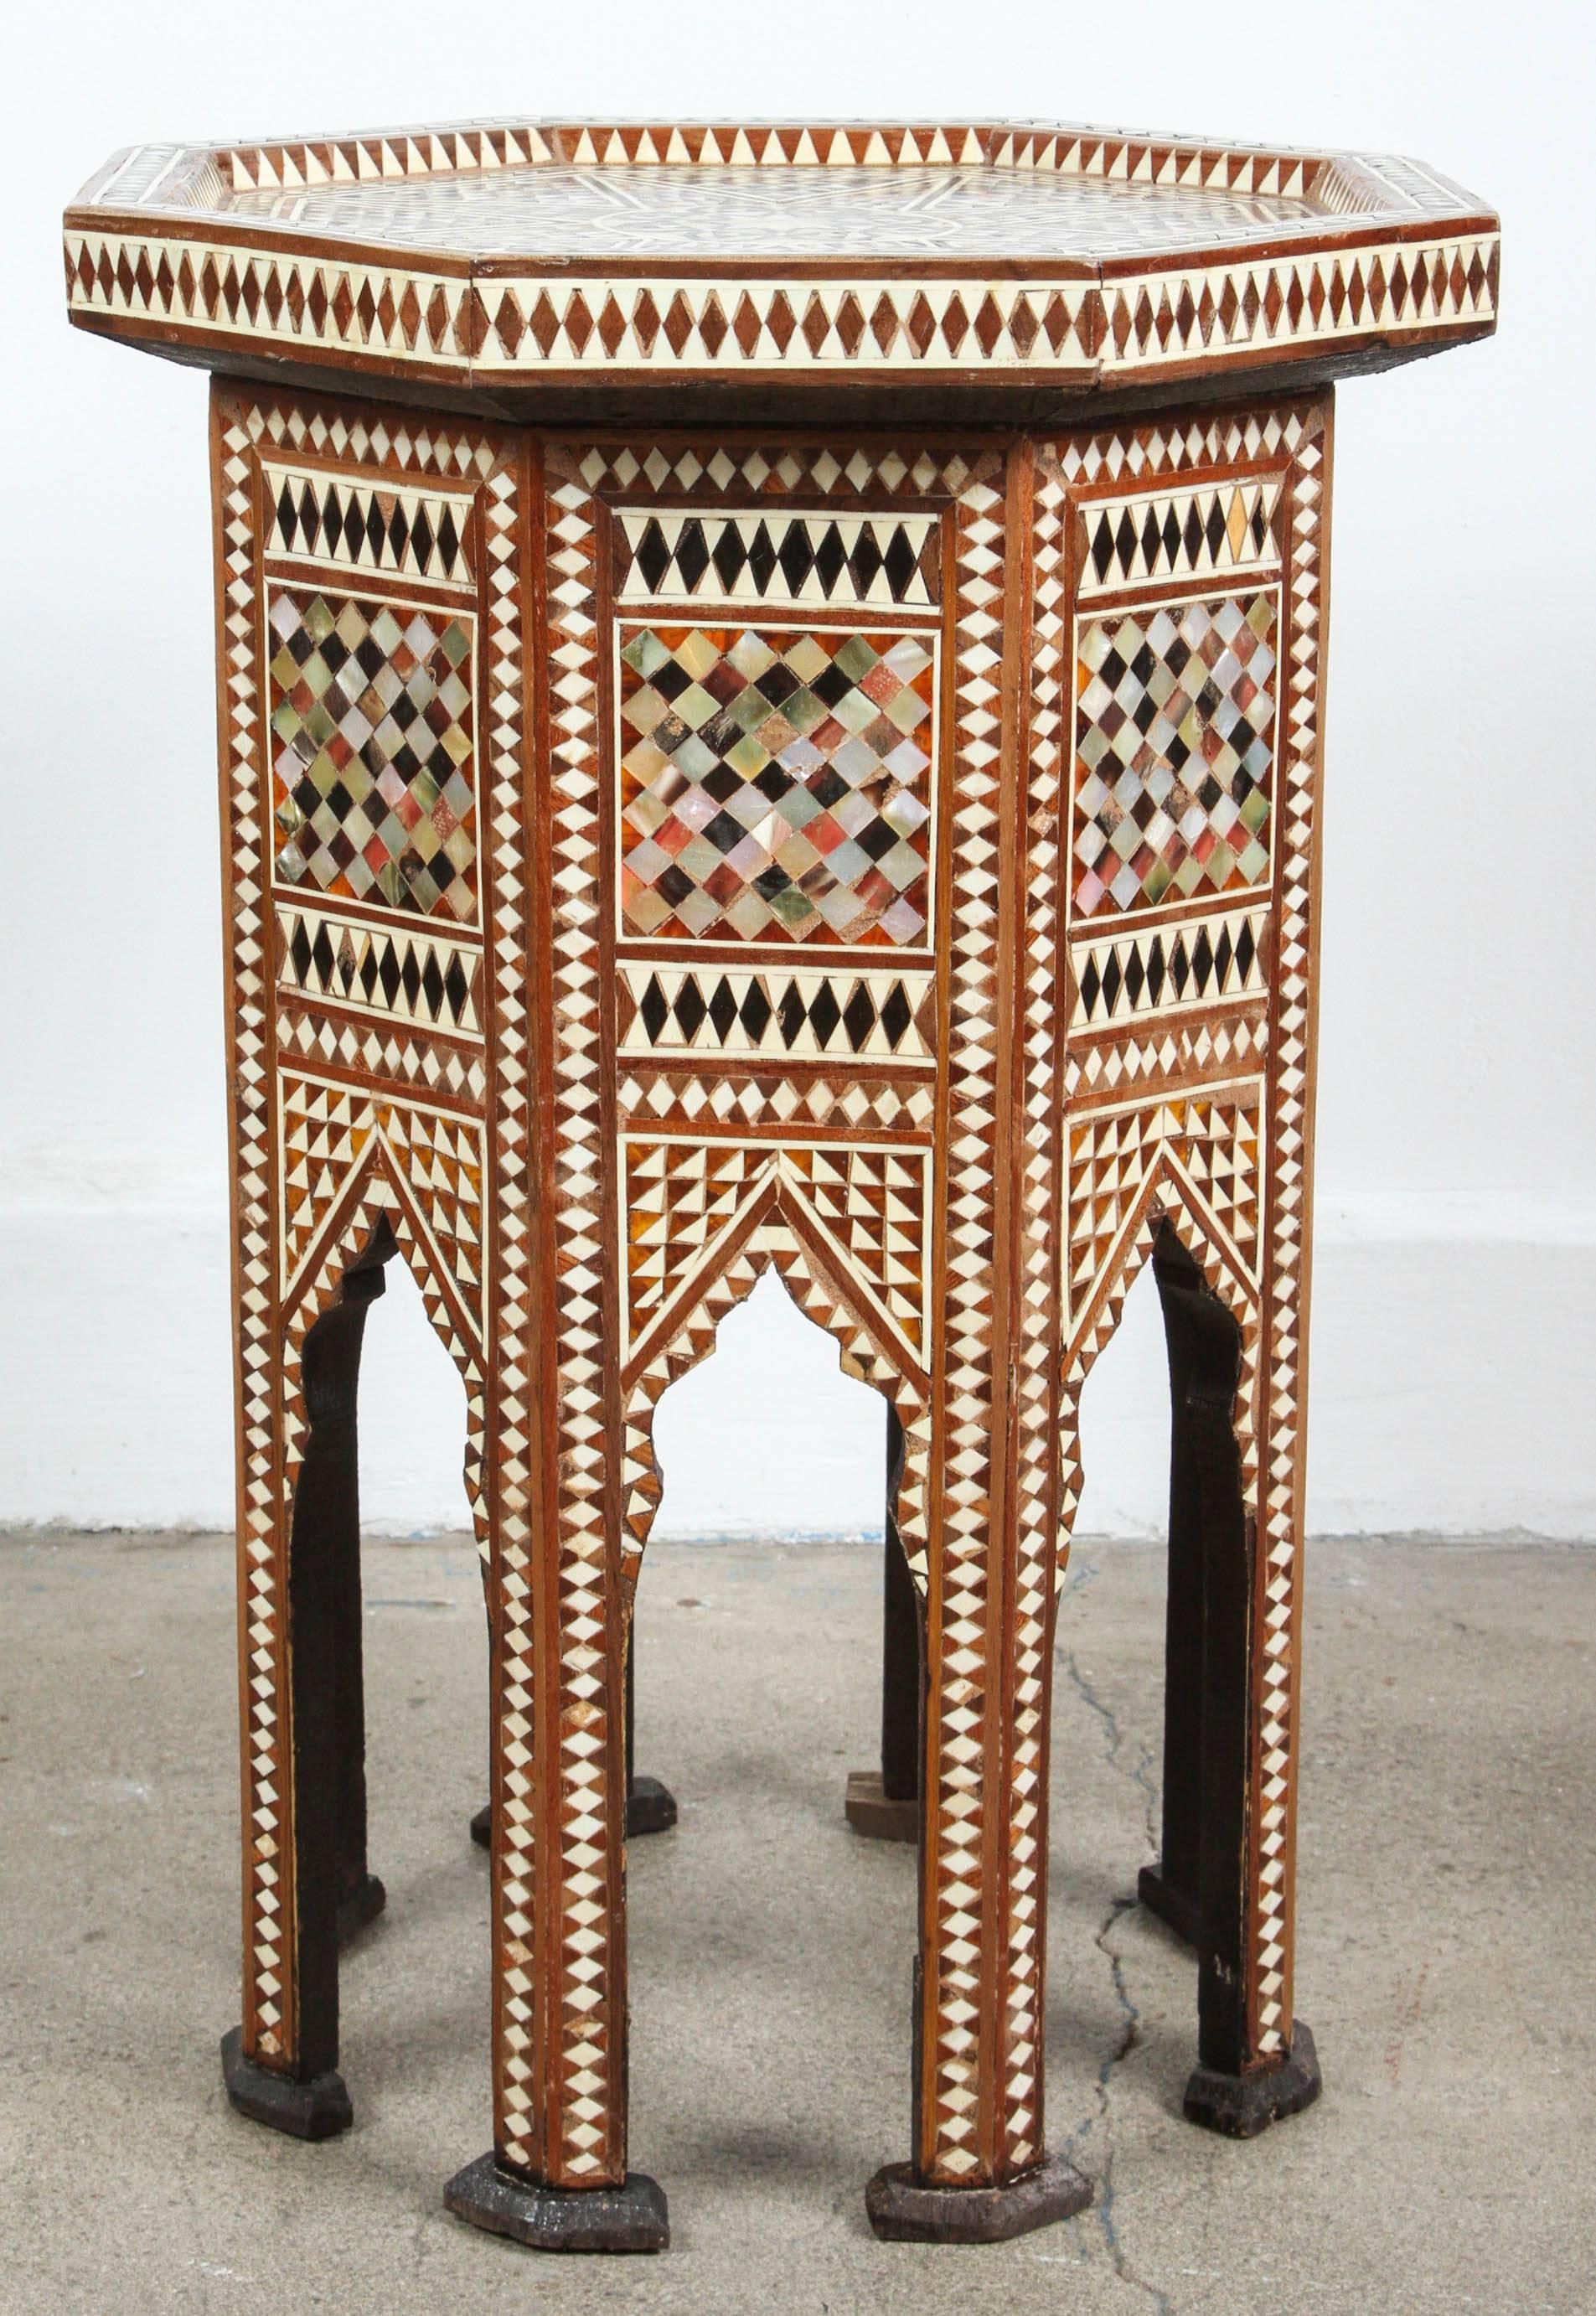 Walnut Moorish Octagonal Tables Inlay with Mother of Pearl